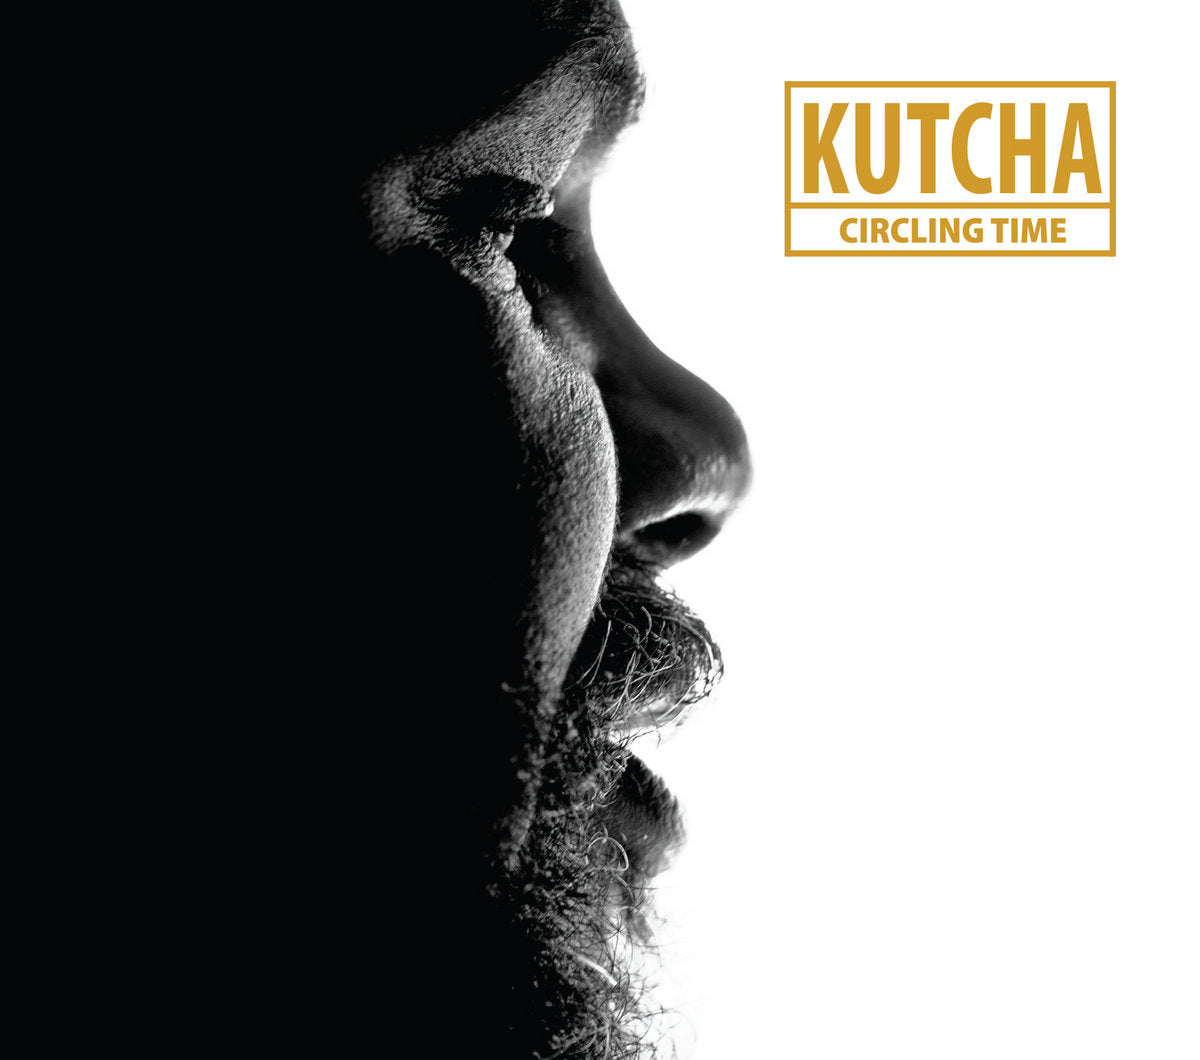 KUTCHA - "CIRCLING TIME" LP